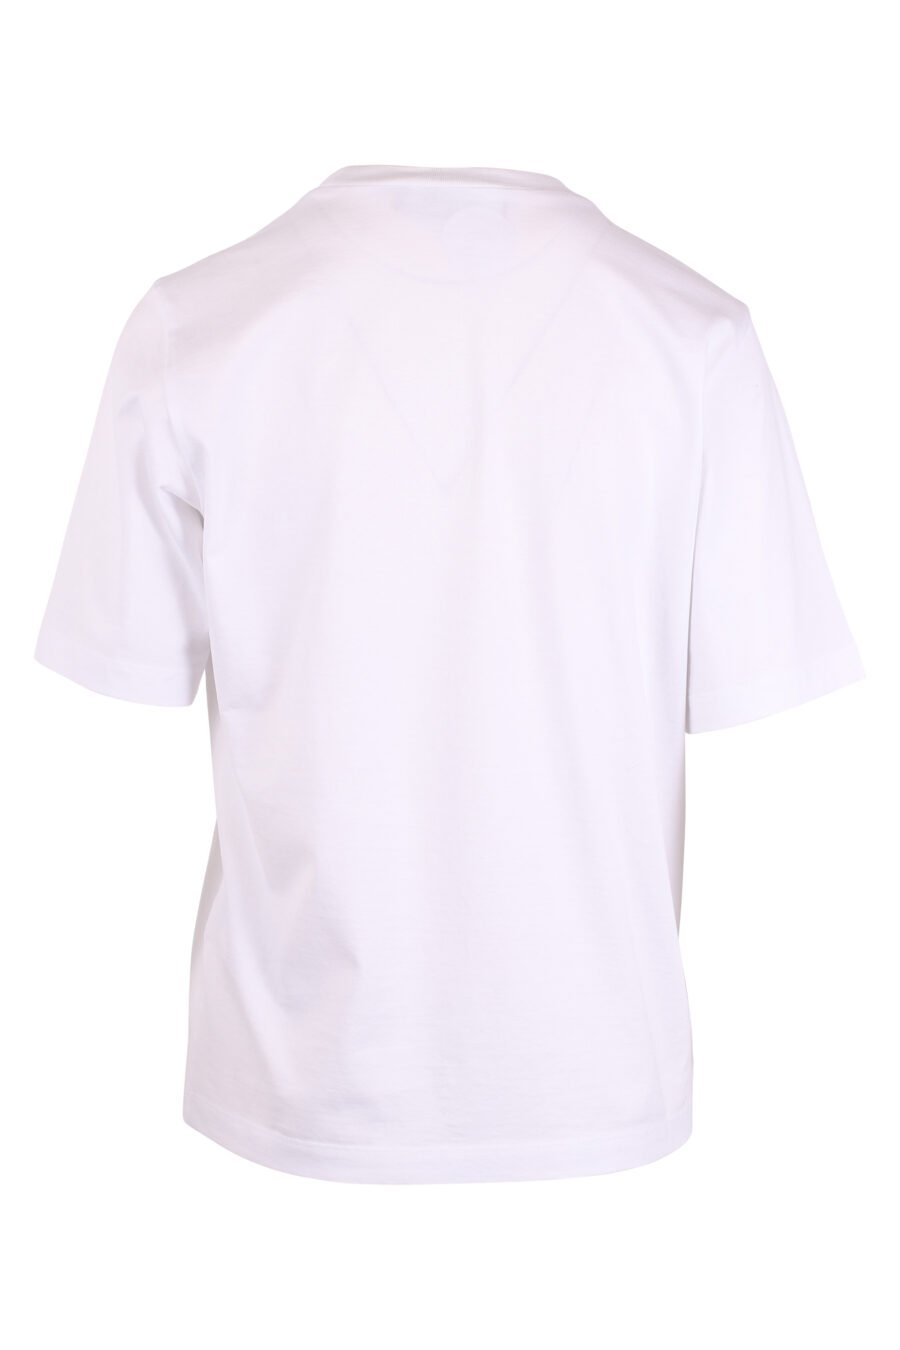 Camiseta blanca con logo hoja caricatura - IMG 4360